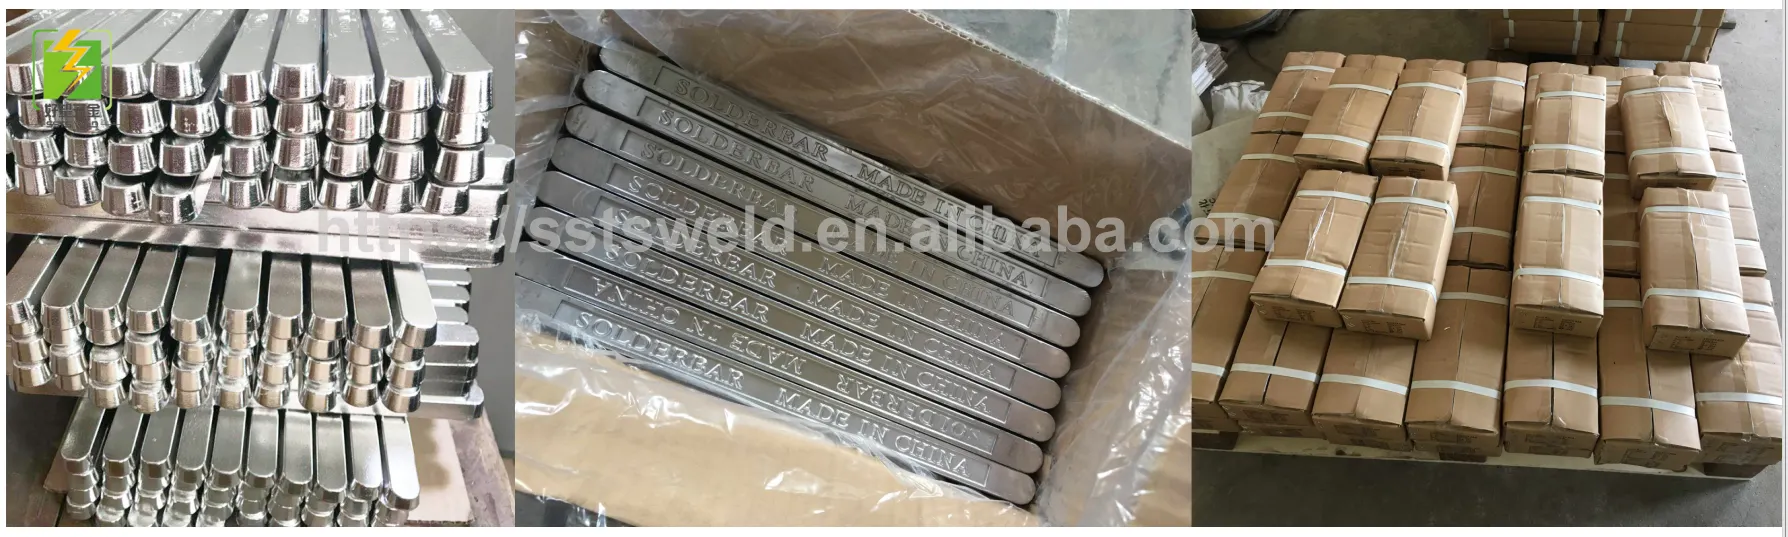 Lead-Free Pure Tin Solder Bar/Lead Free Welding Rod SAC0307 Low Dross 1.1LB 500g